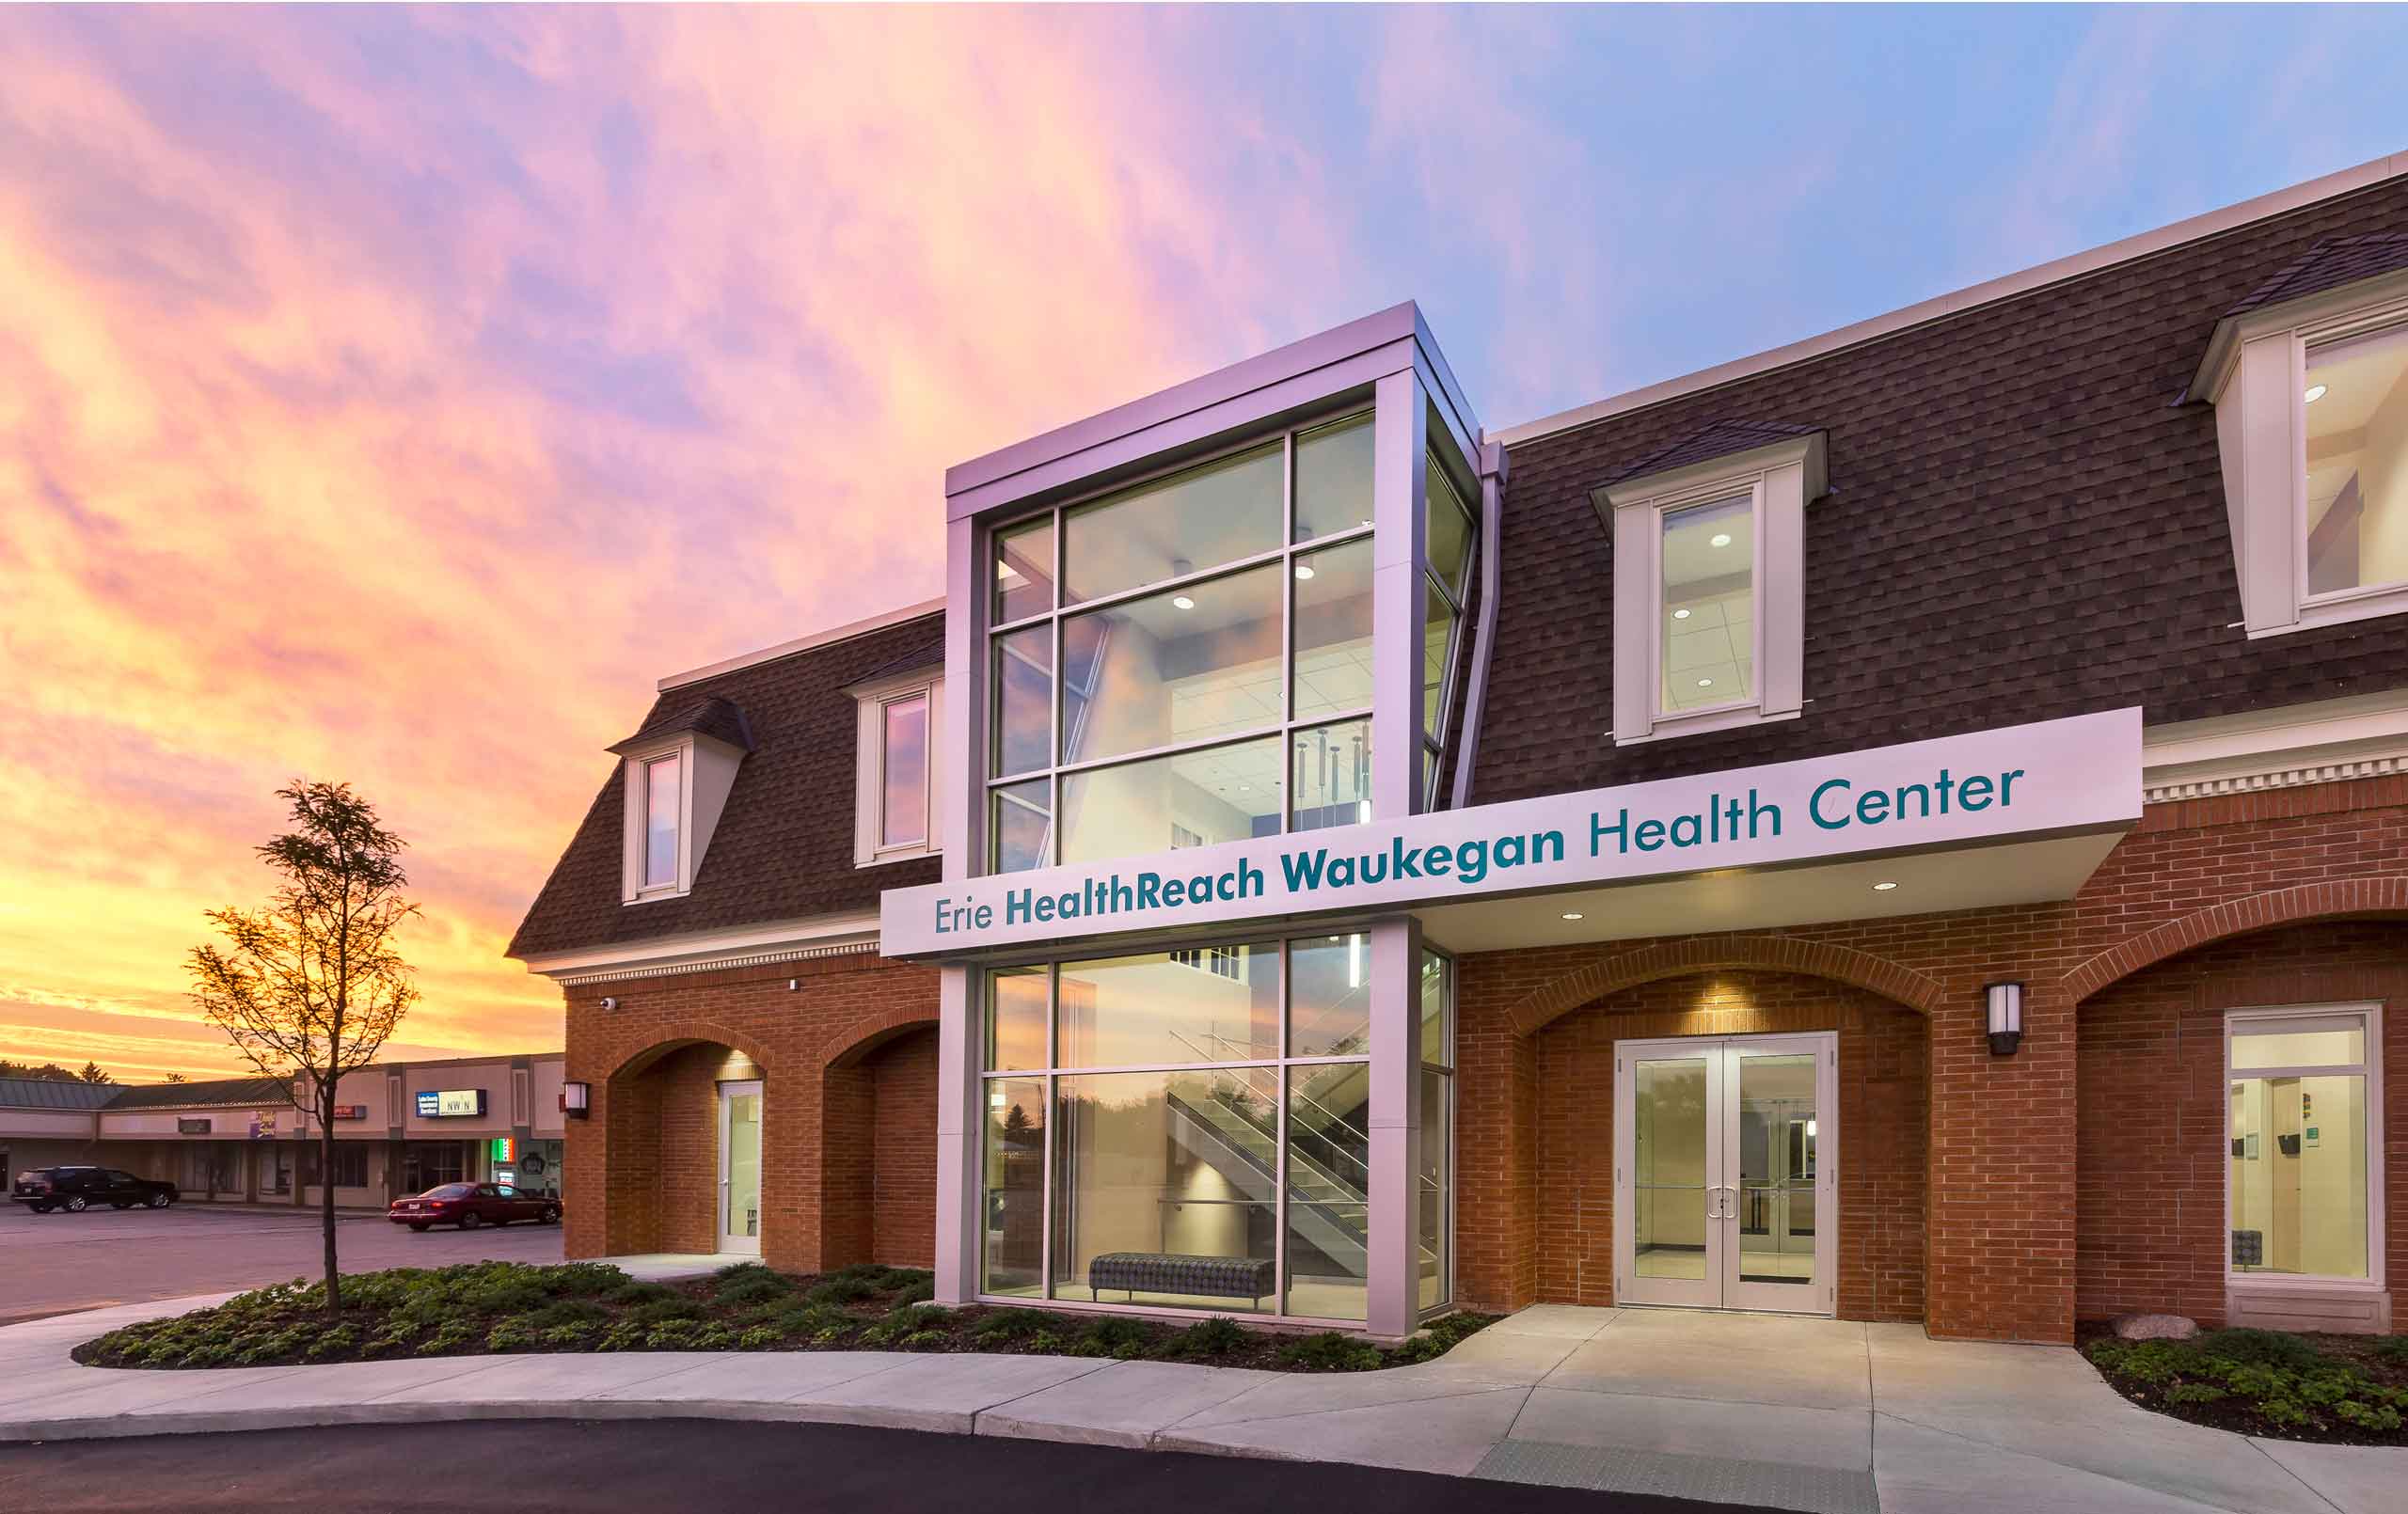 Project Erie HealthReach Waukegan Health Center